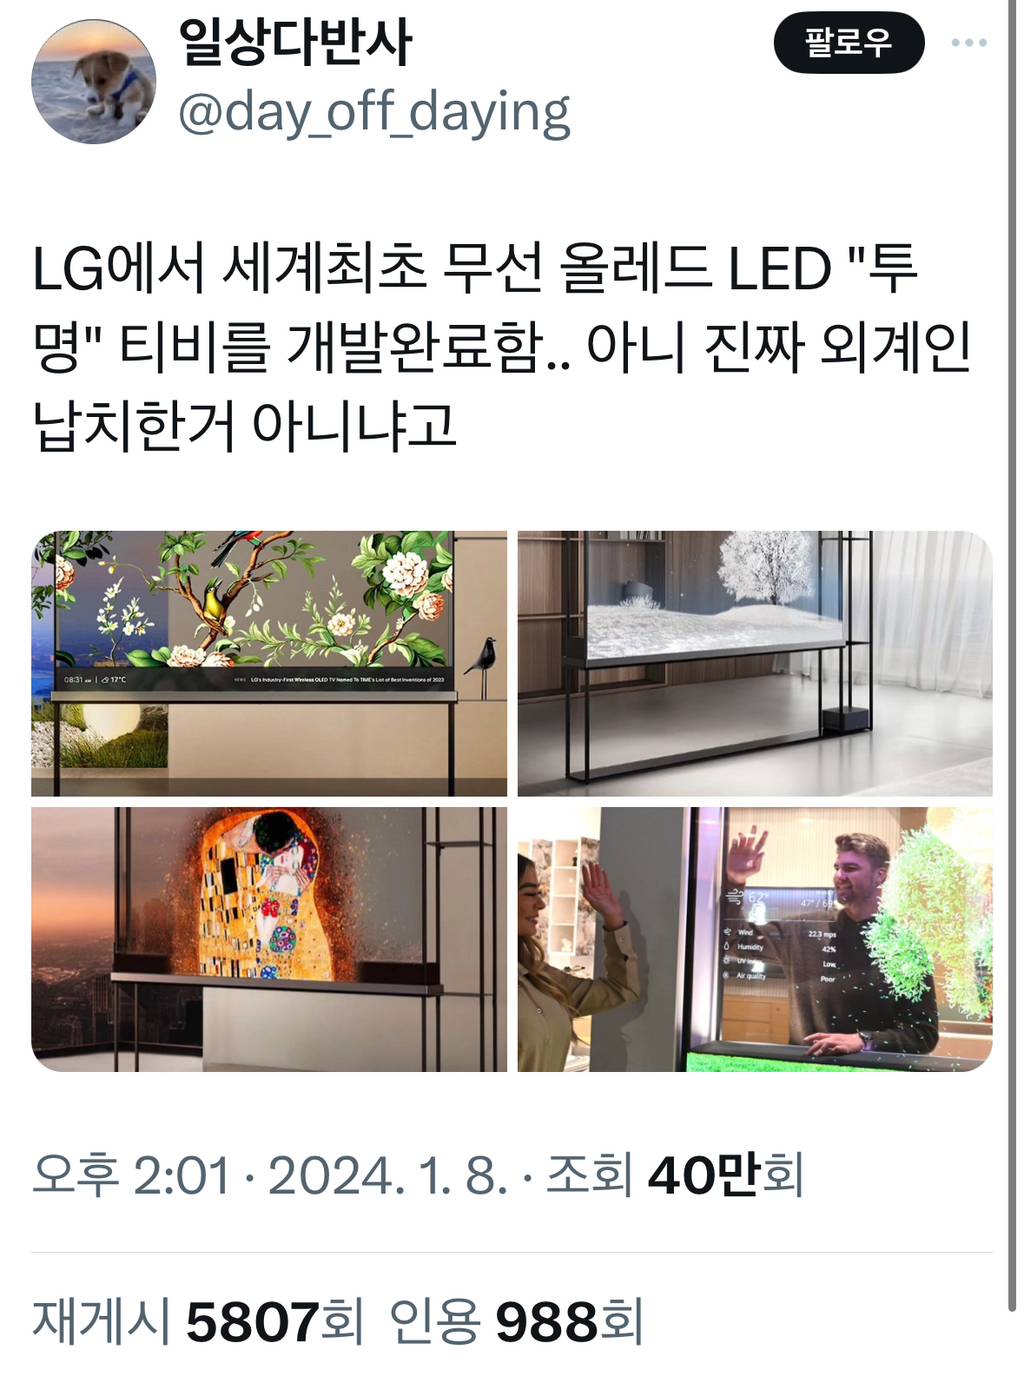 LG에서 세계최초 무선 올레드 LED "투명" 티비를 개발완료함.. 아니 진짜 외계인 납치한거 아니냐고.x | 인스티즈